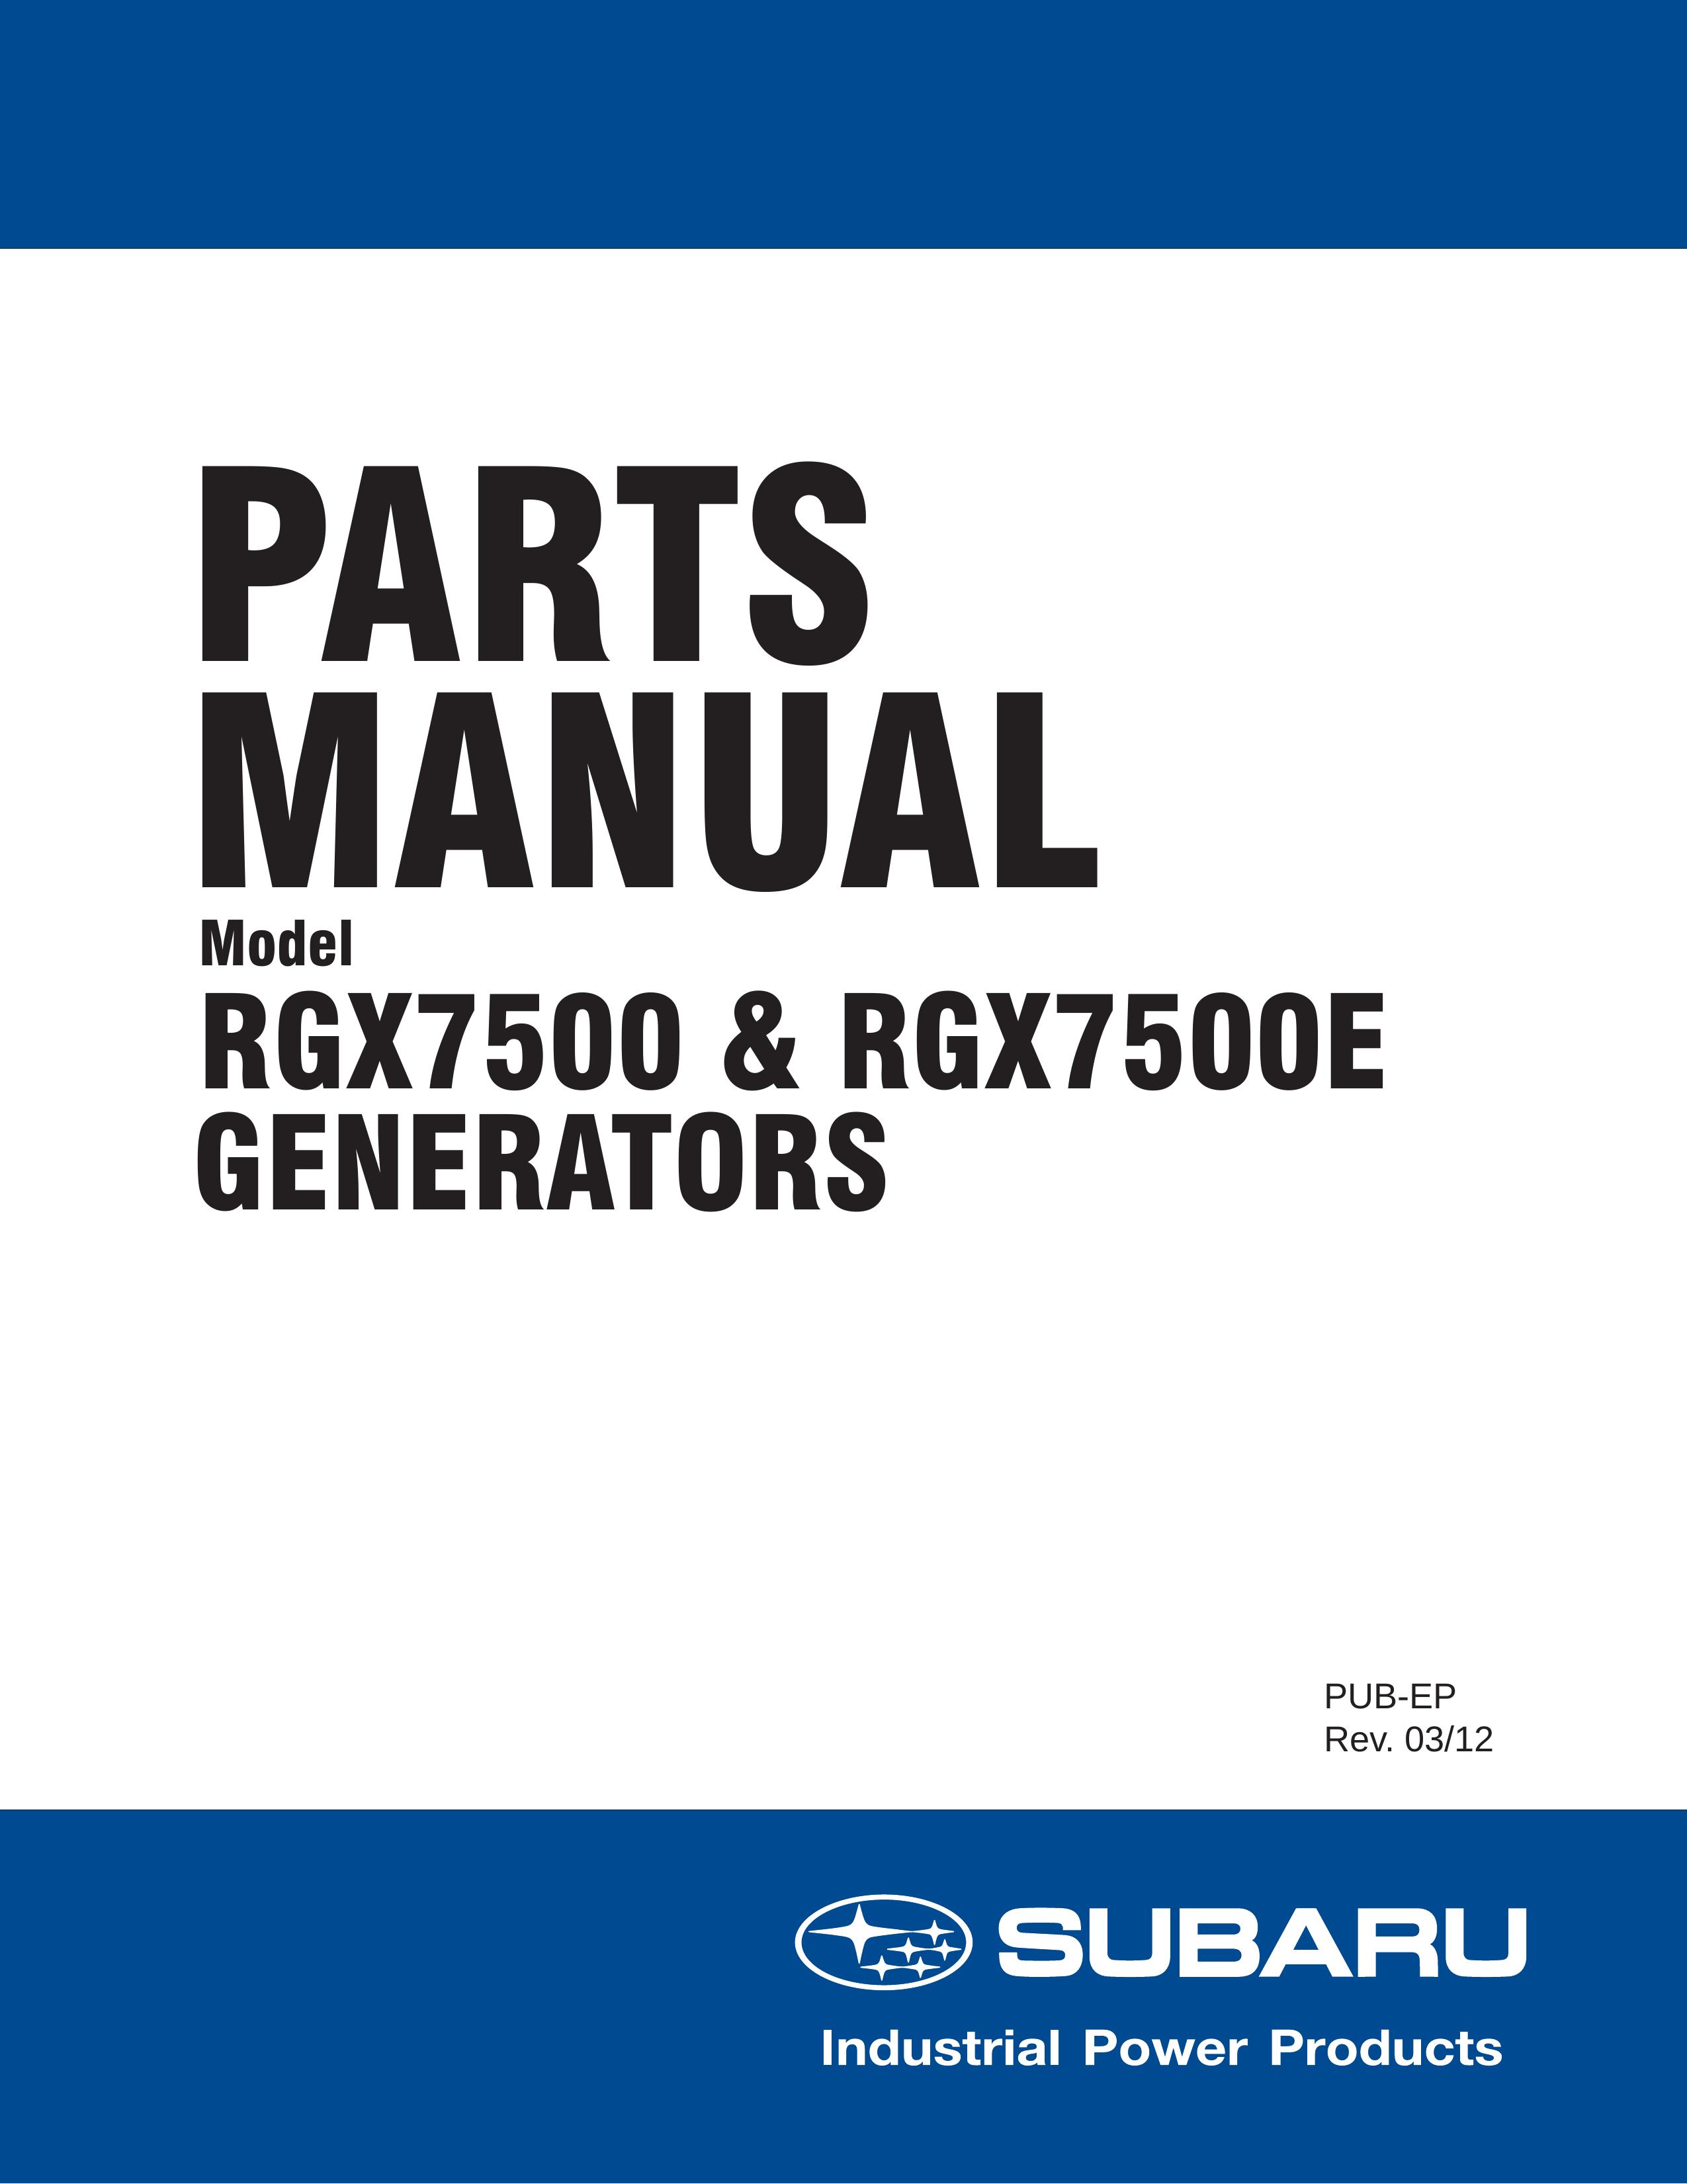 Subaru RGX7500 Portable Generator User Manual